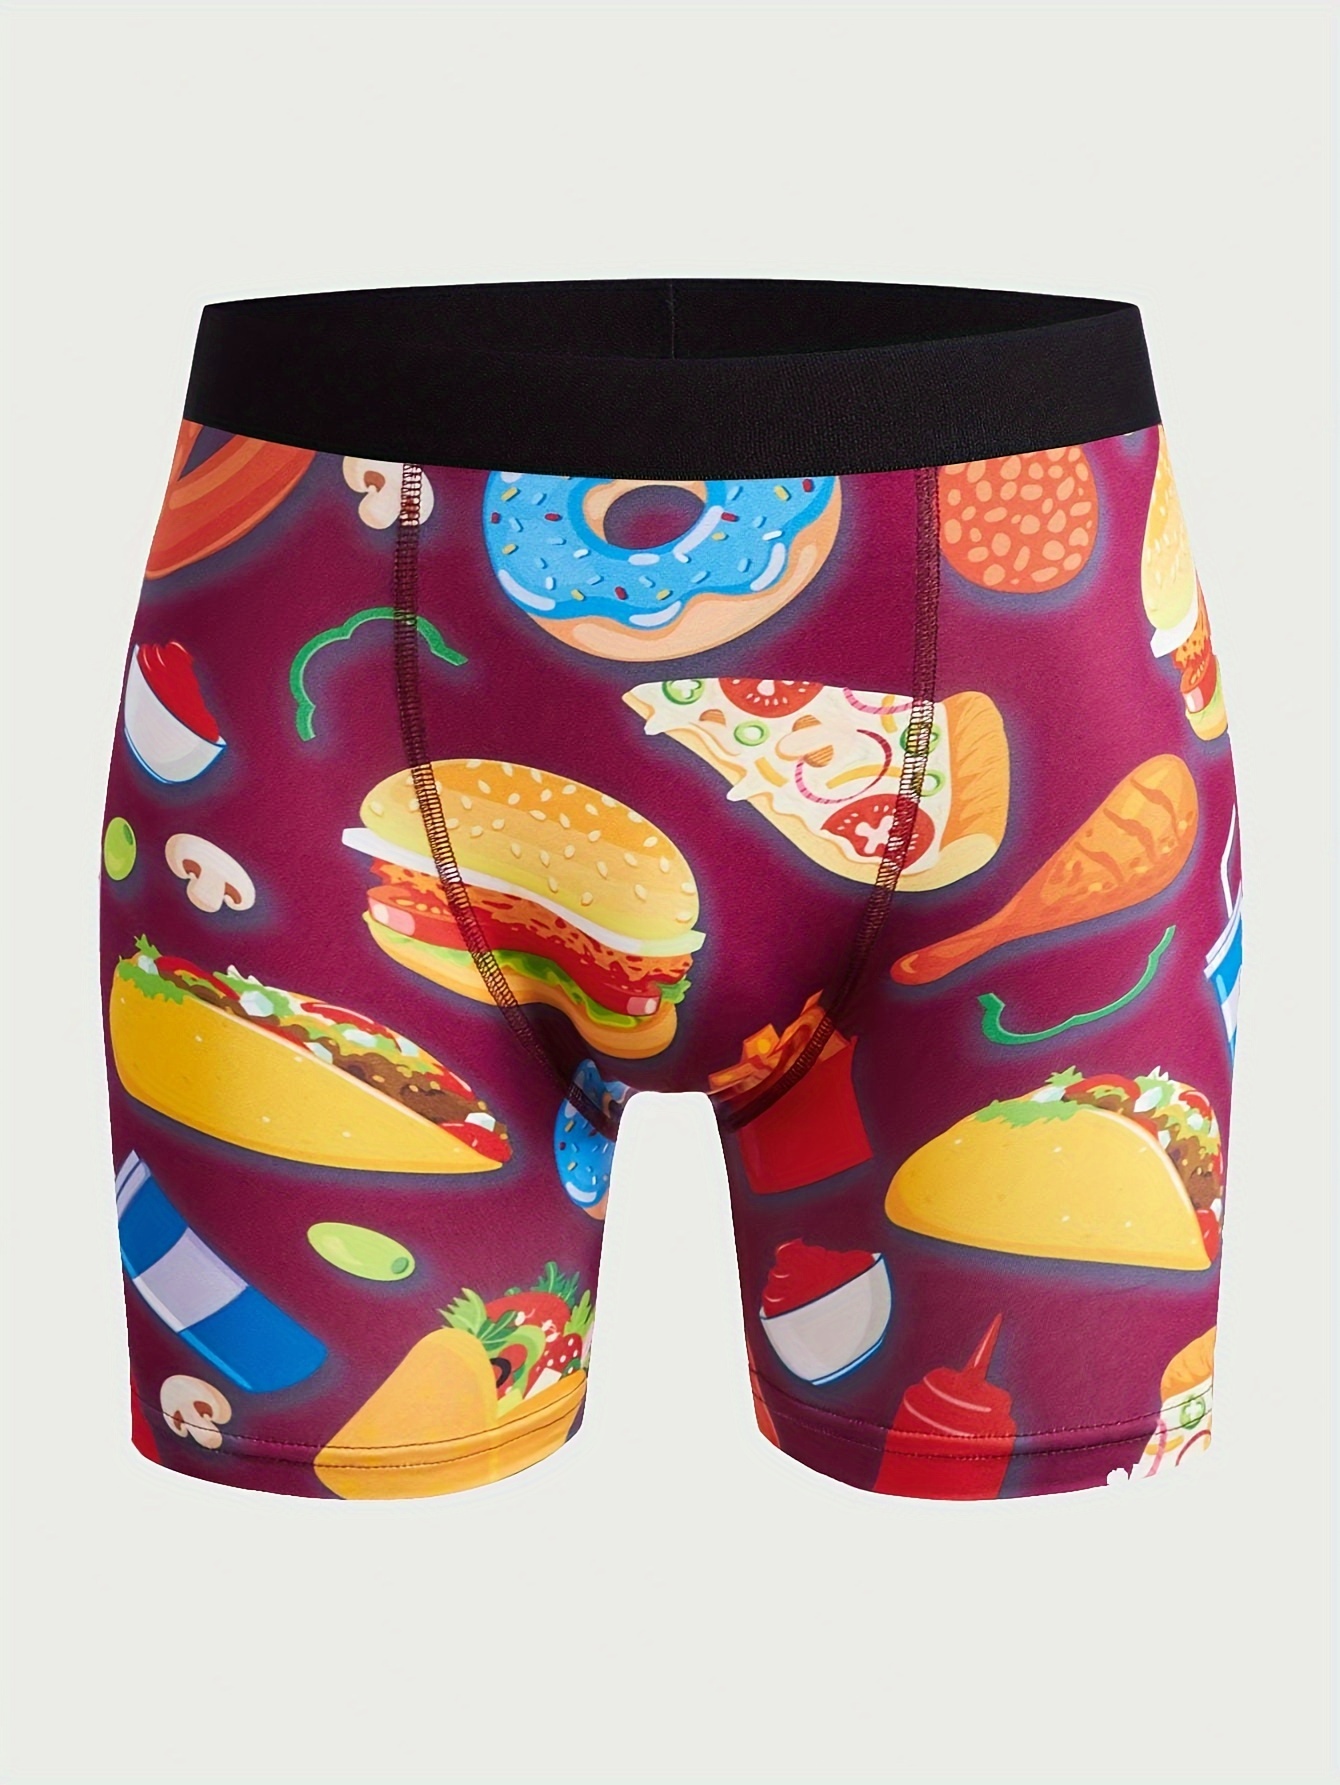 2/3/4/5pcs Men's Fashion Food Pattern Print Novelty Funny Boxer Briefs  Shorts, Breathable Comfy Boxer Trunks, Men's Underwear